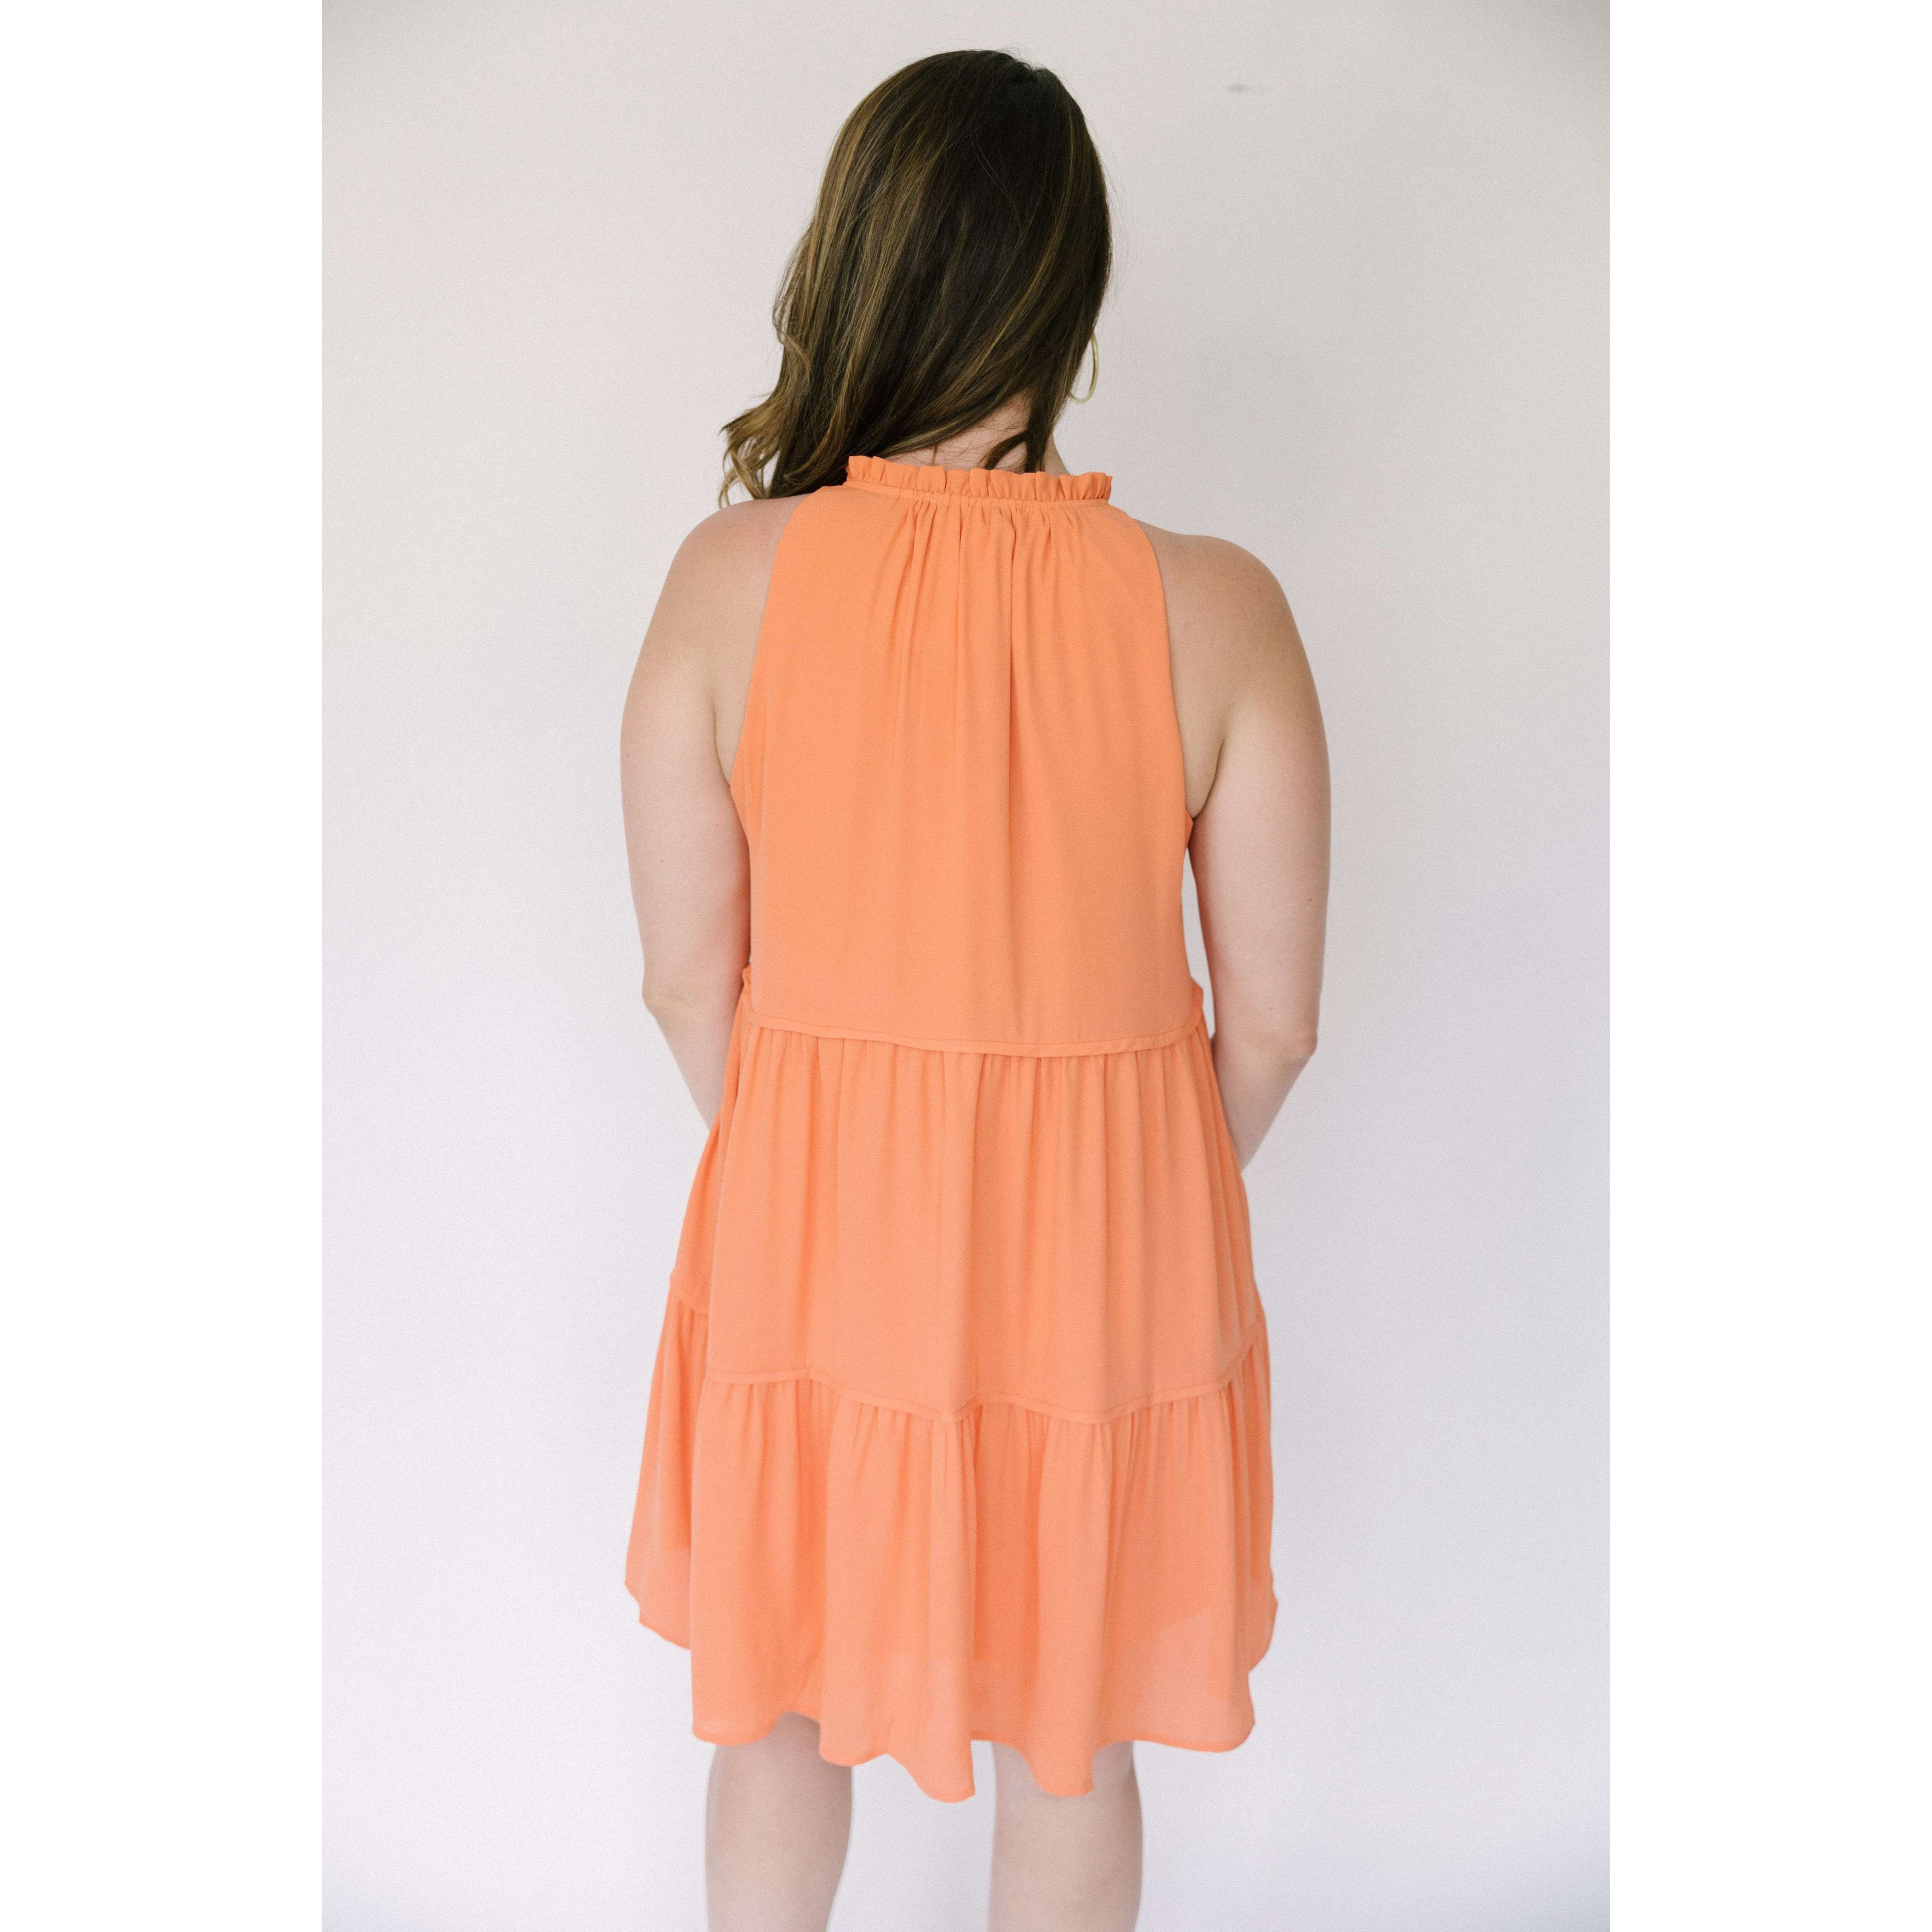 8.28 Boutique:Joy*Joy,Joy*Joy Tiered Halter Dress in Orange,Dresses